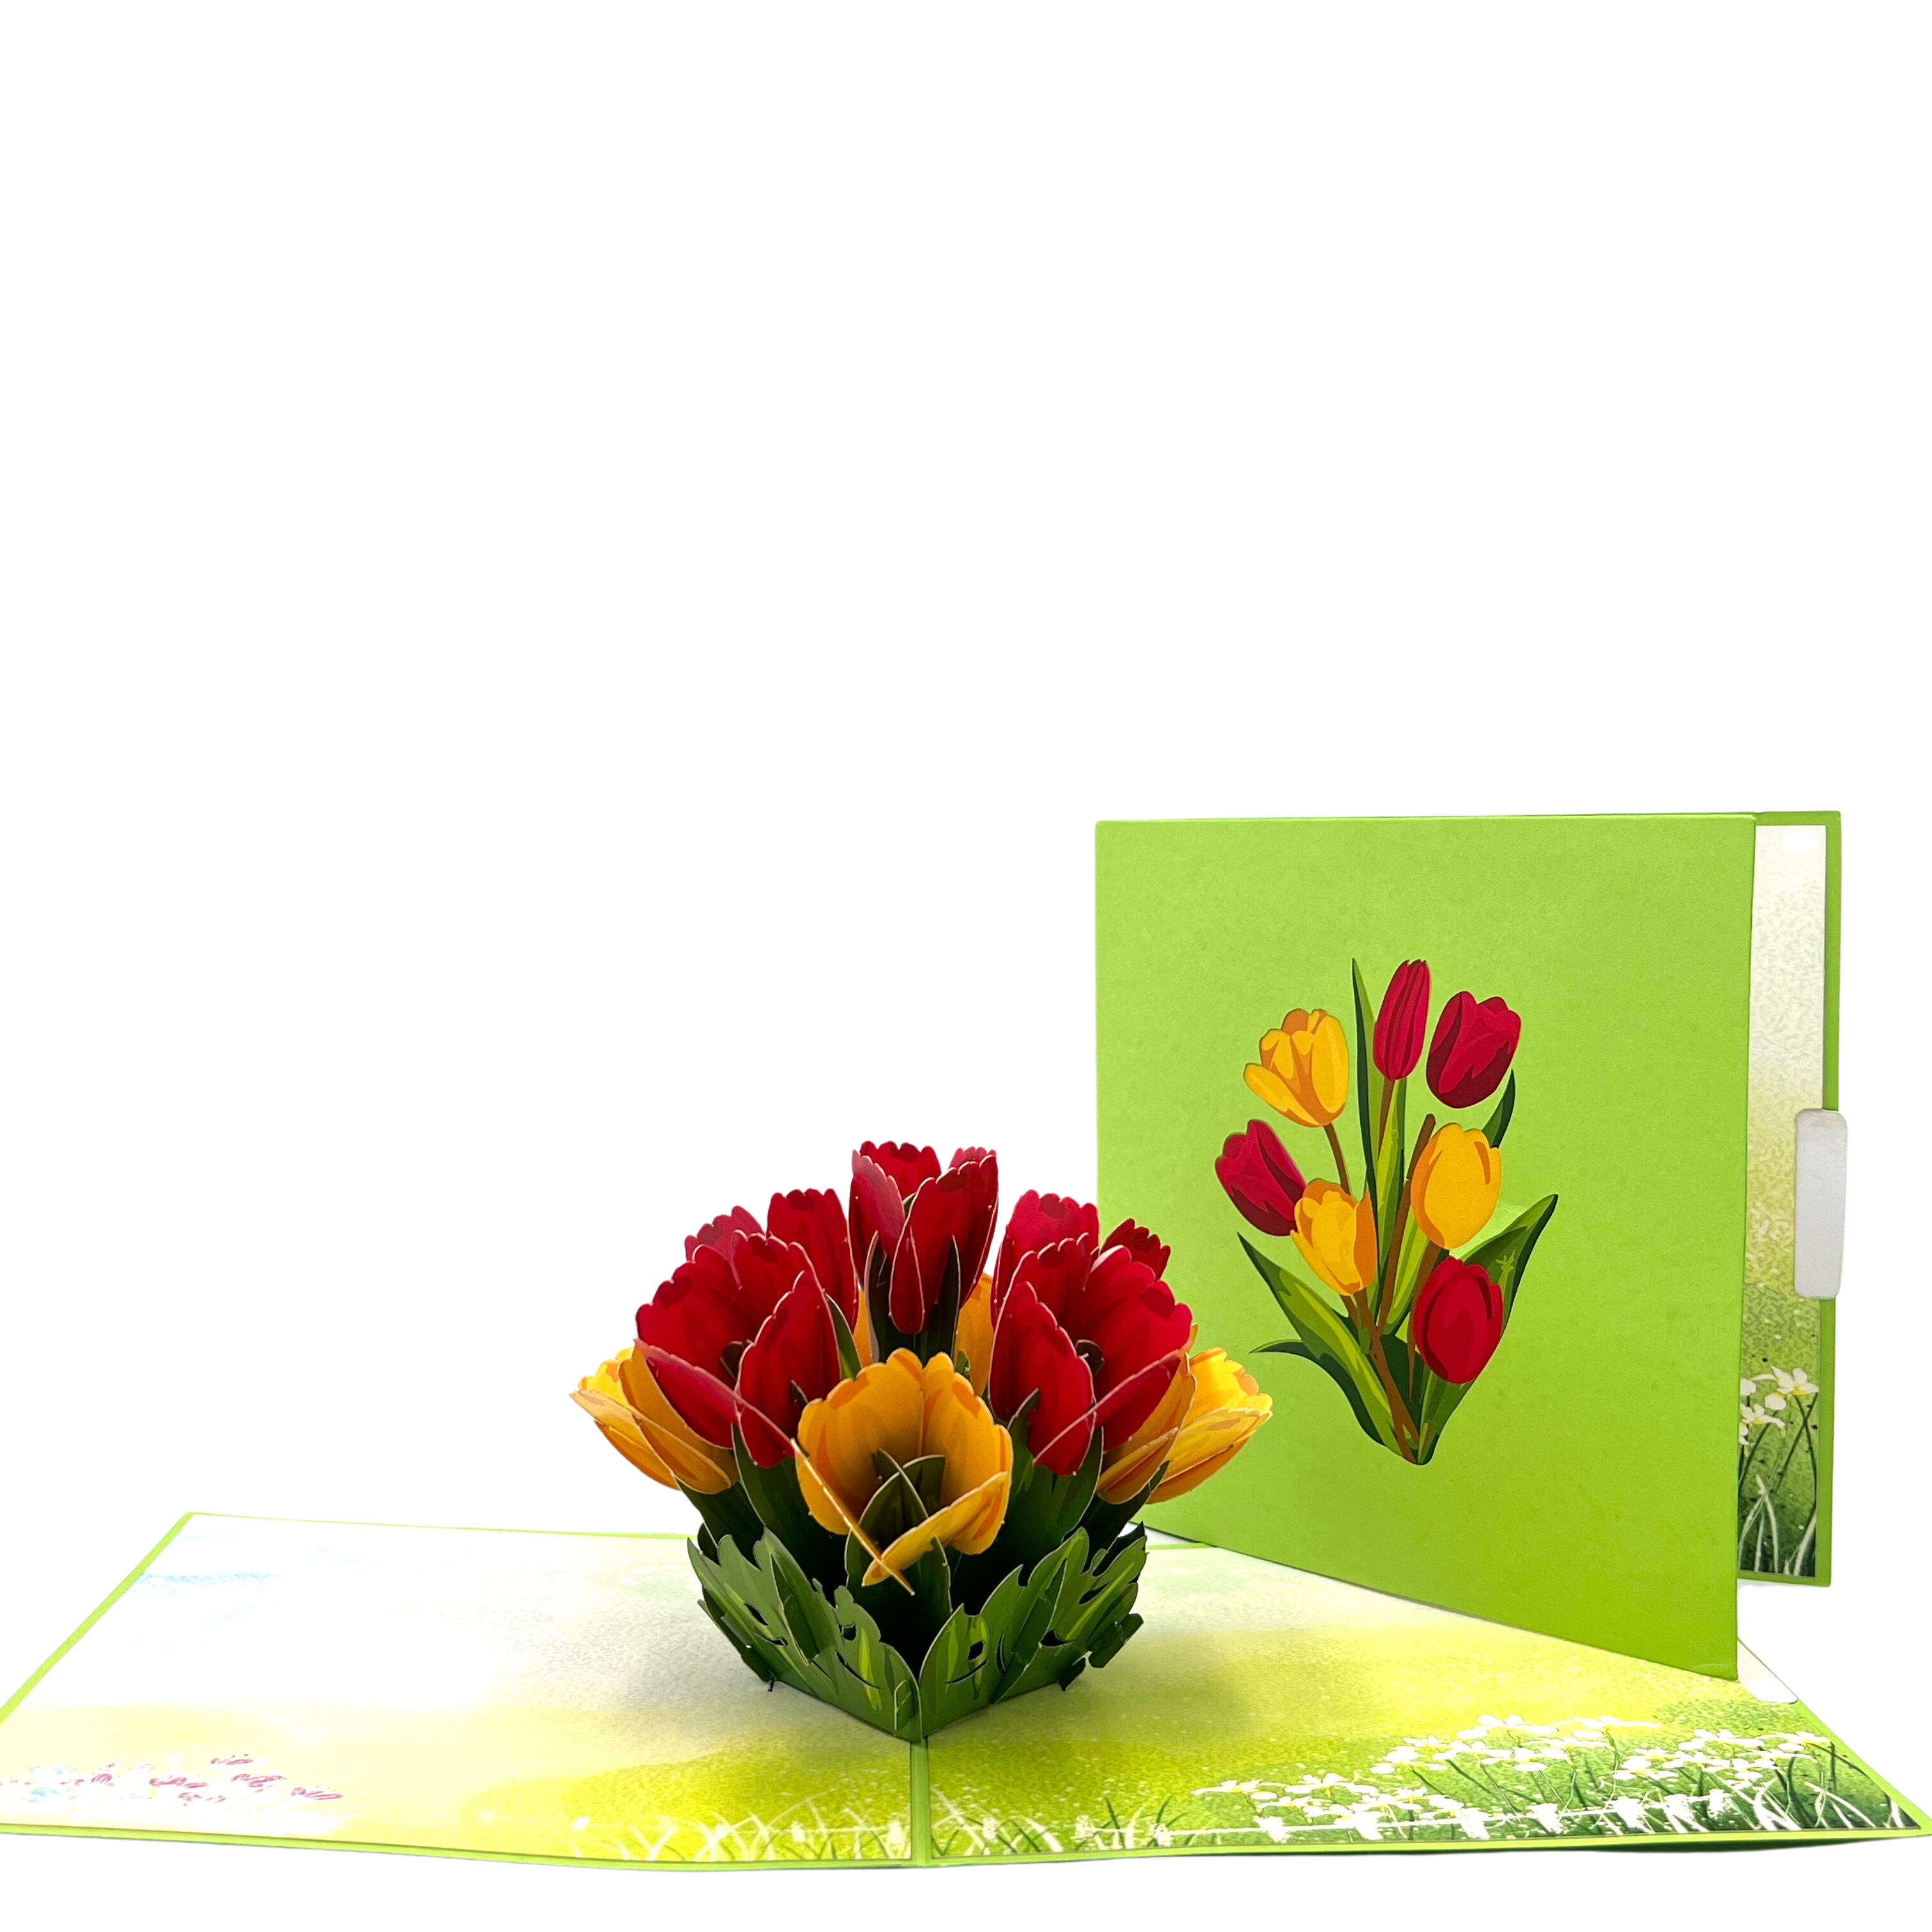 https://cdn.shopify.com/s/files/1/0160/3855/9844/files/Niumcraft-bunch-of-tulips-3D-pop-up-greeting-card-02.png?v=1692631229&width=3024